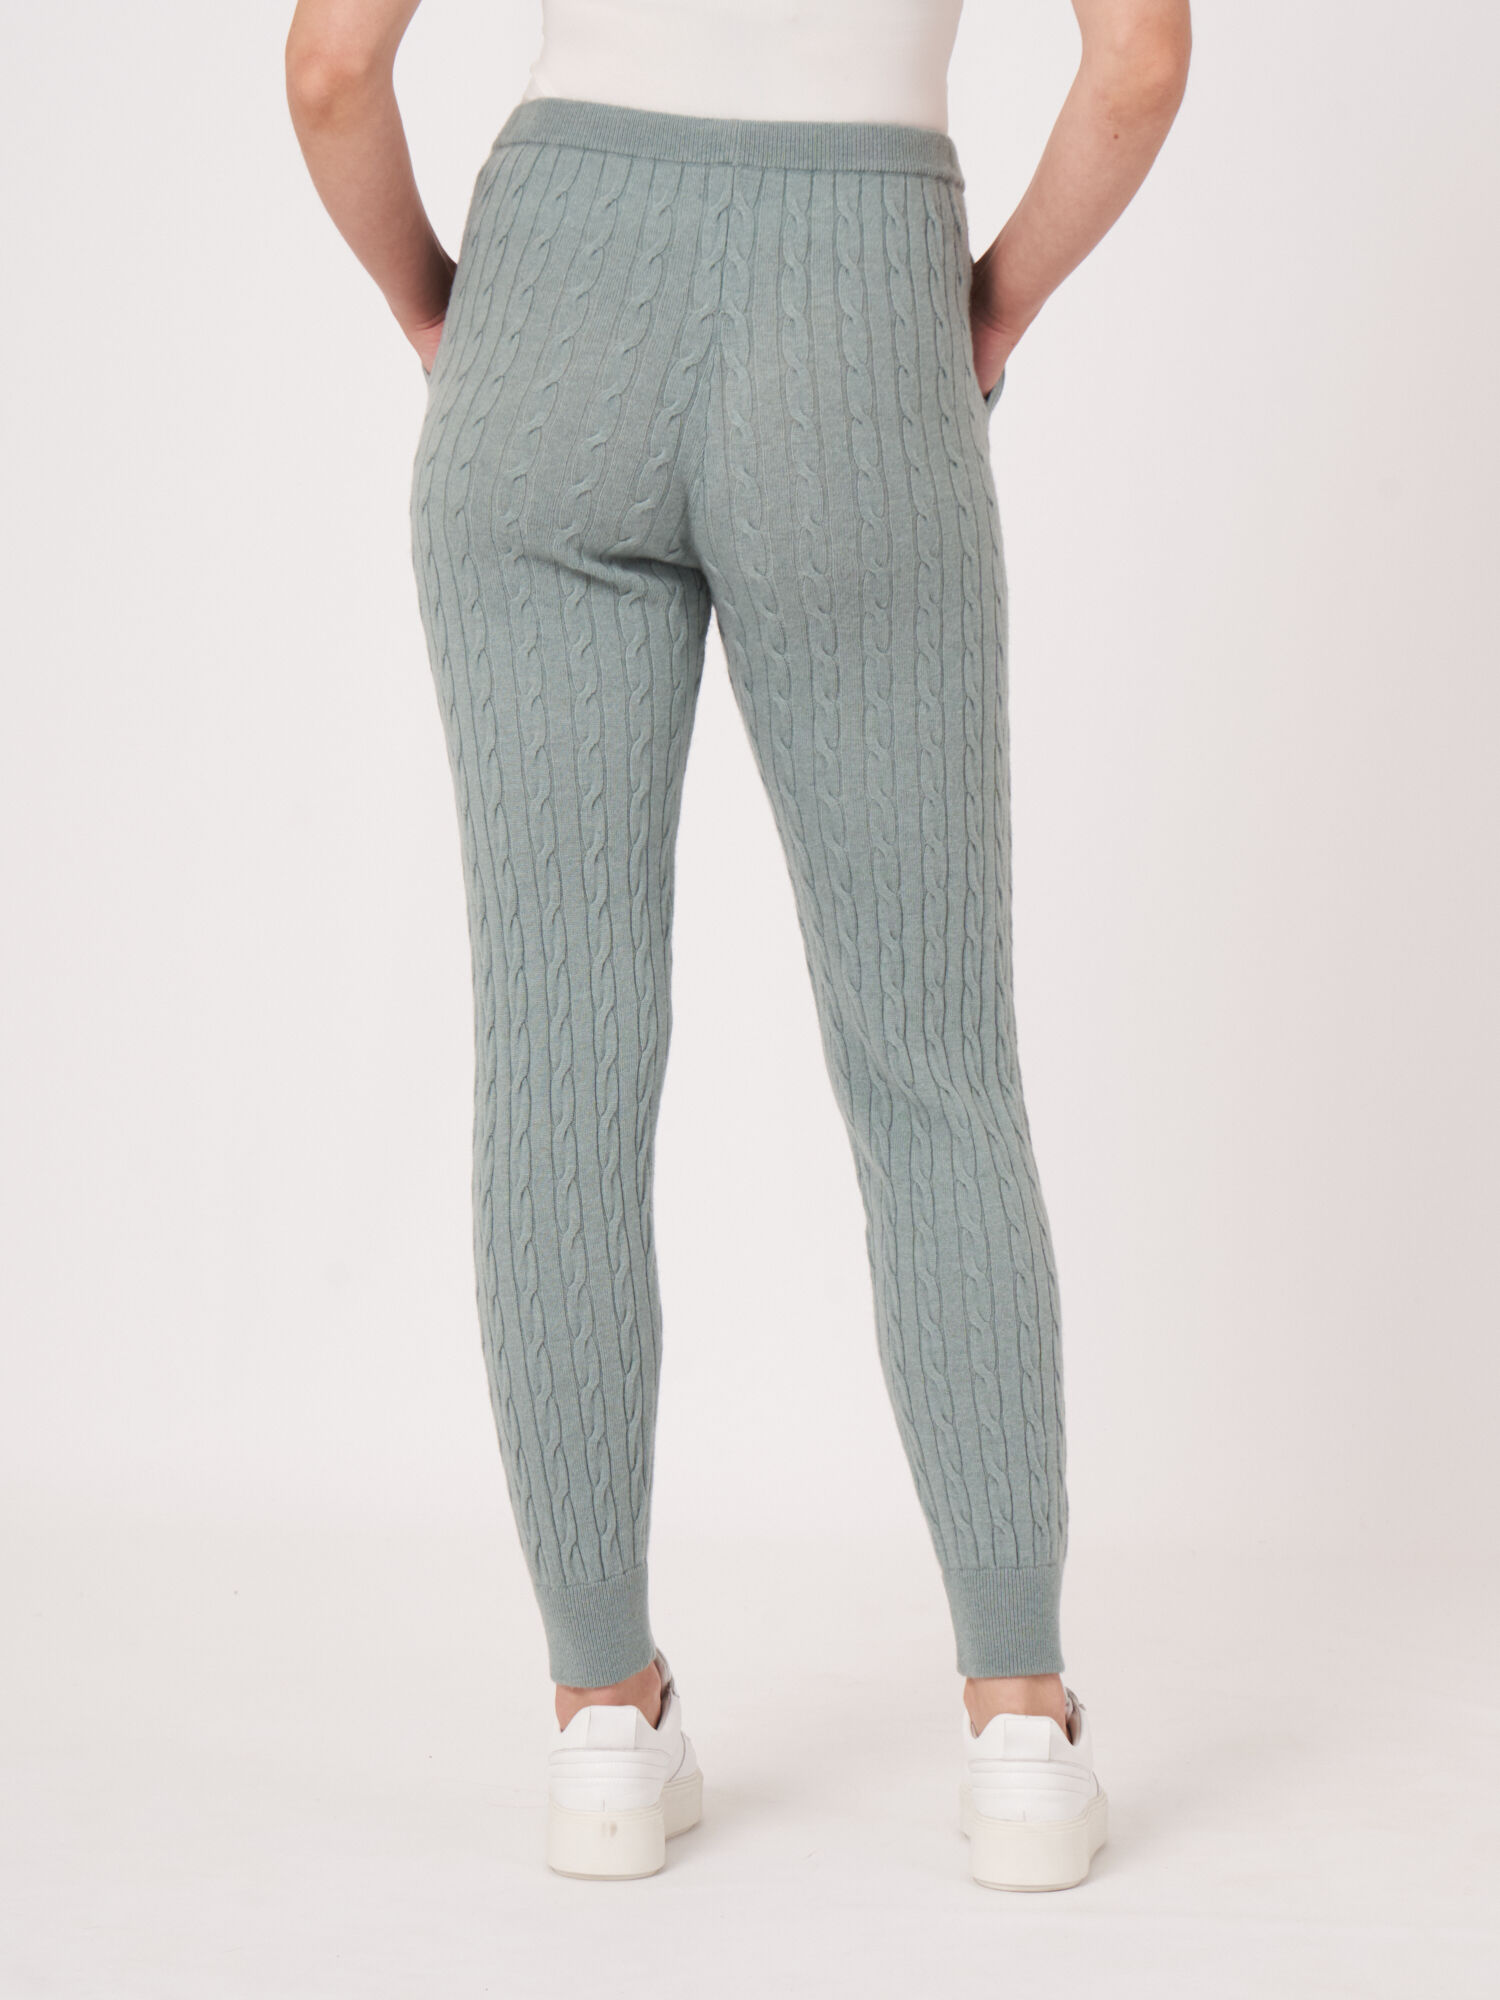 Cable knit pants